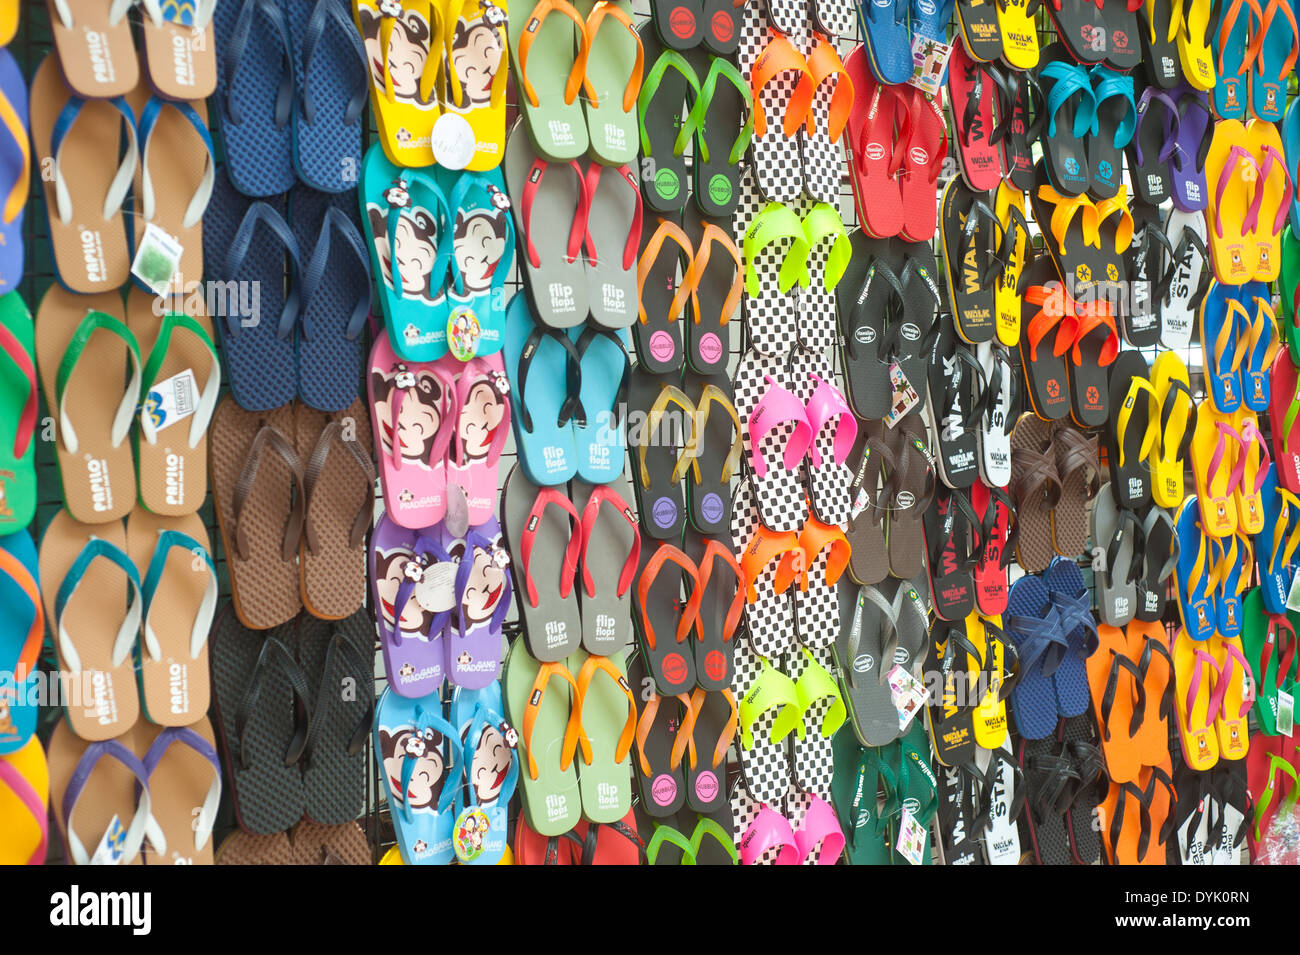 Bangkok, Thailand - Flip flop for sale display Stock Photo - Alamy